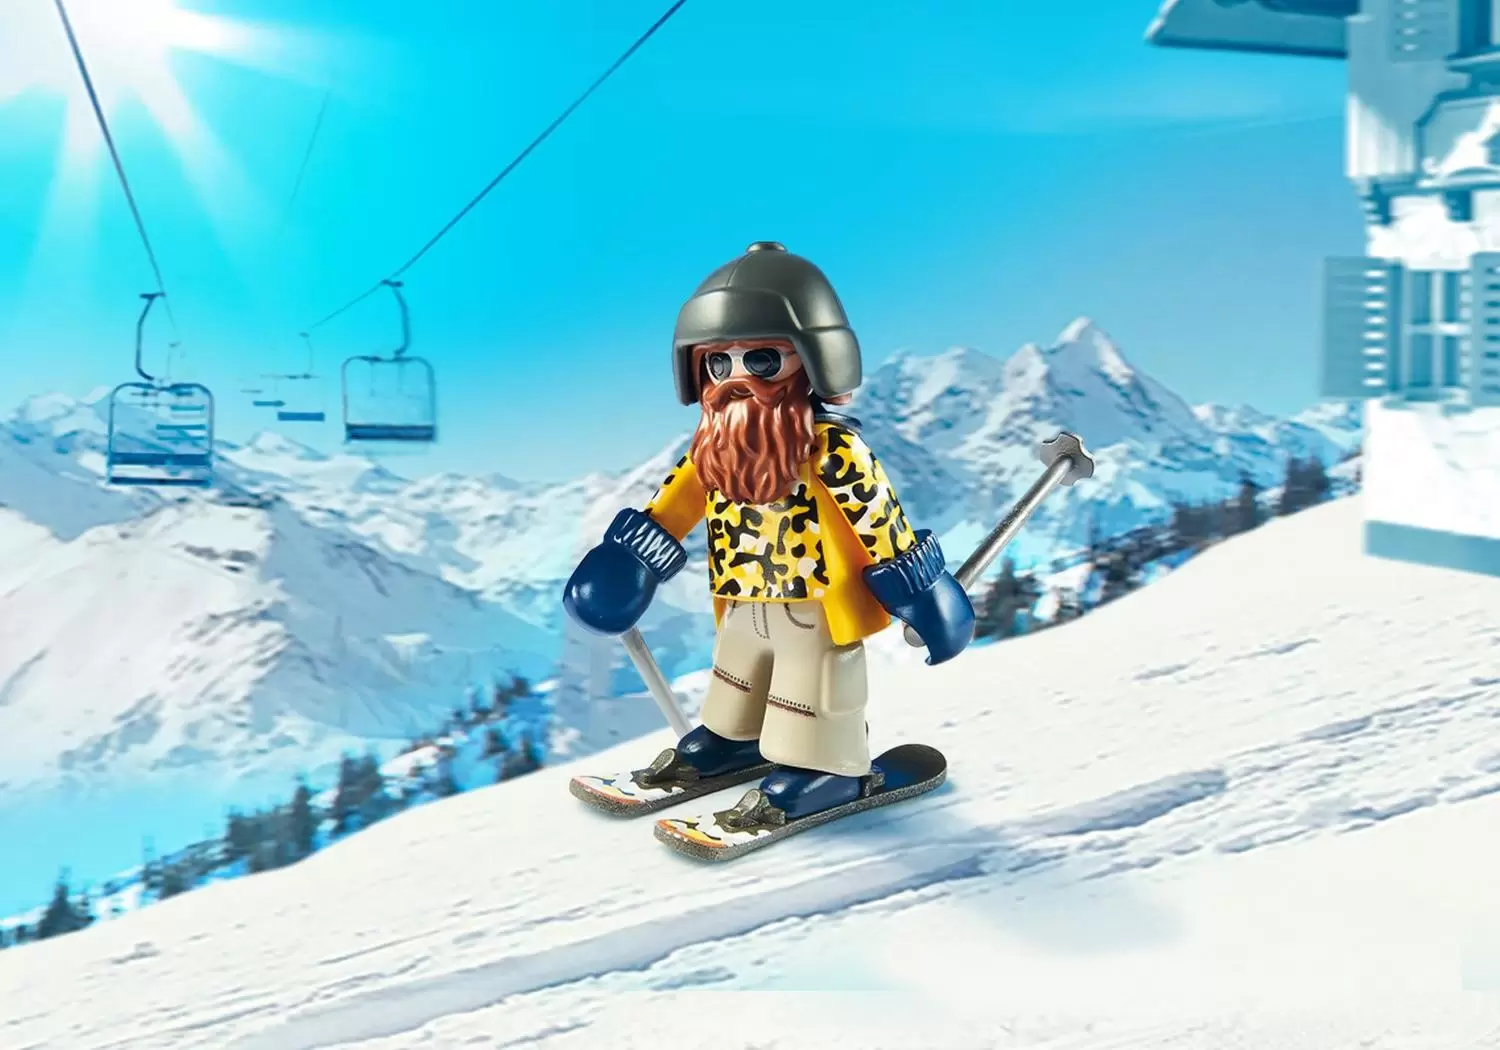 Playmobil Winter sports - Skier with snowblades